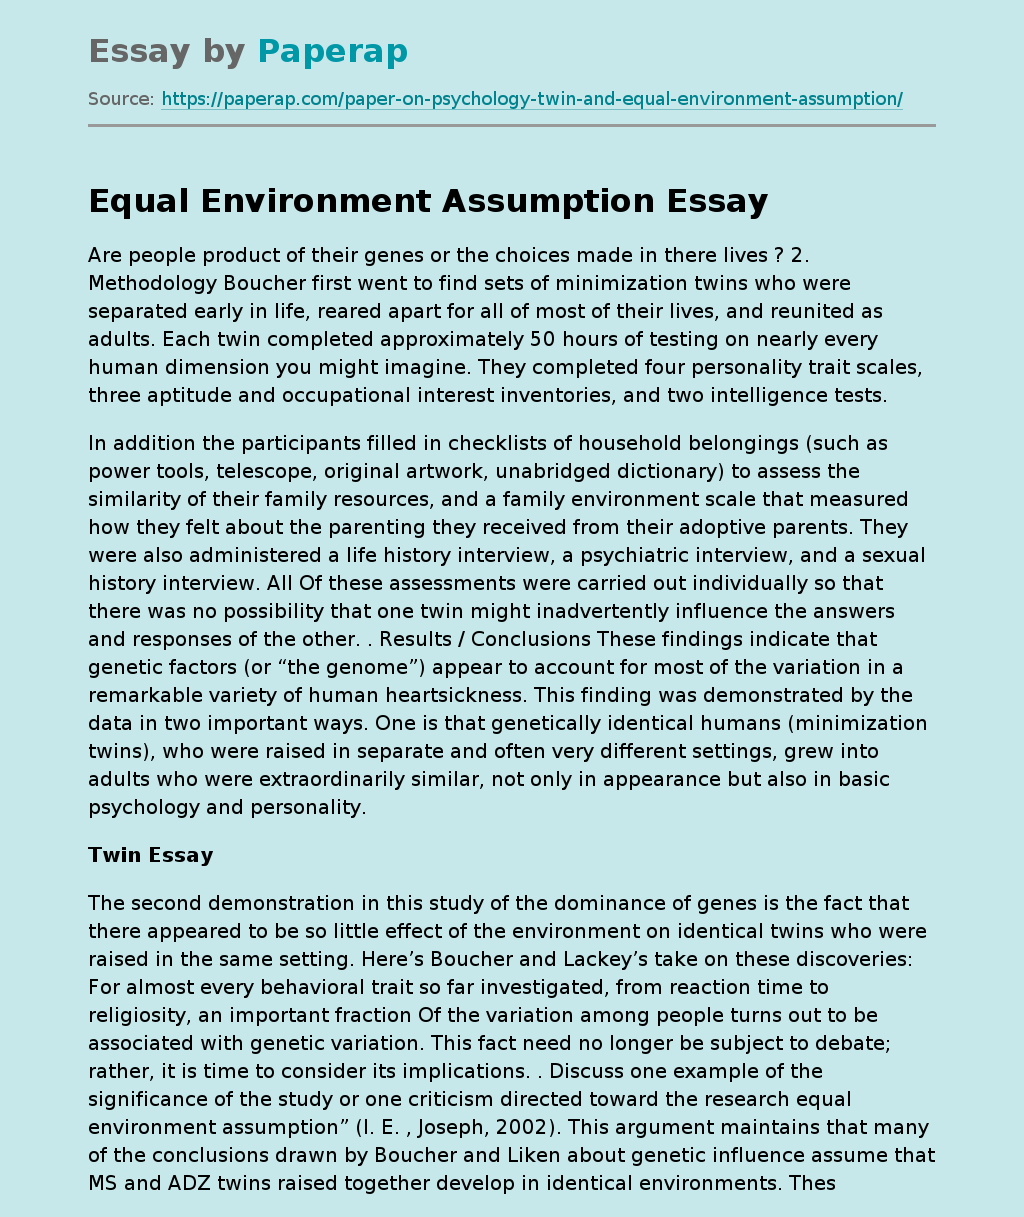 Equal Environment Assumption